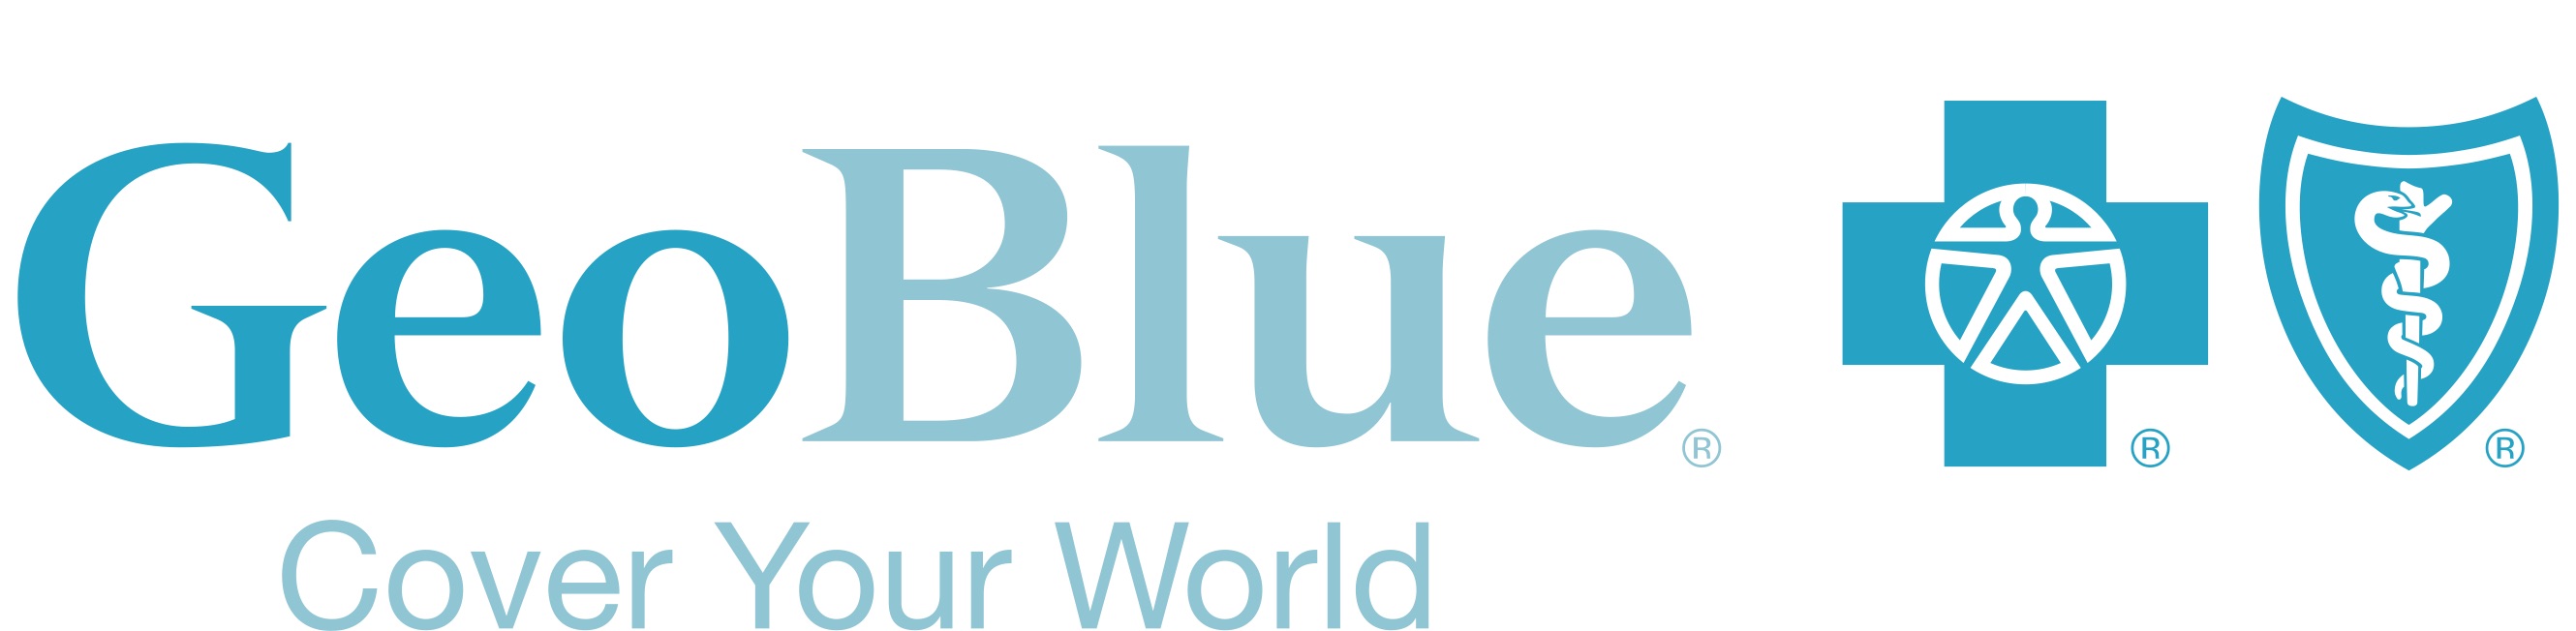 GeoBlue Travel Insurance